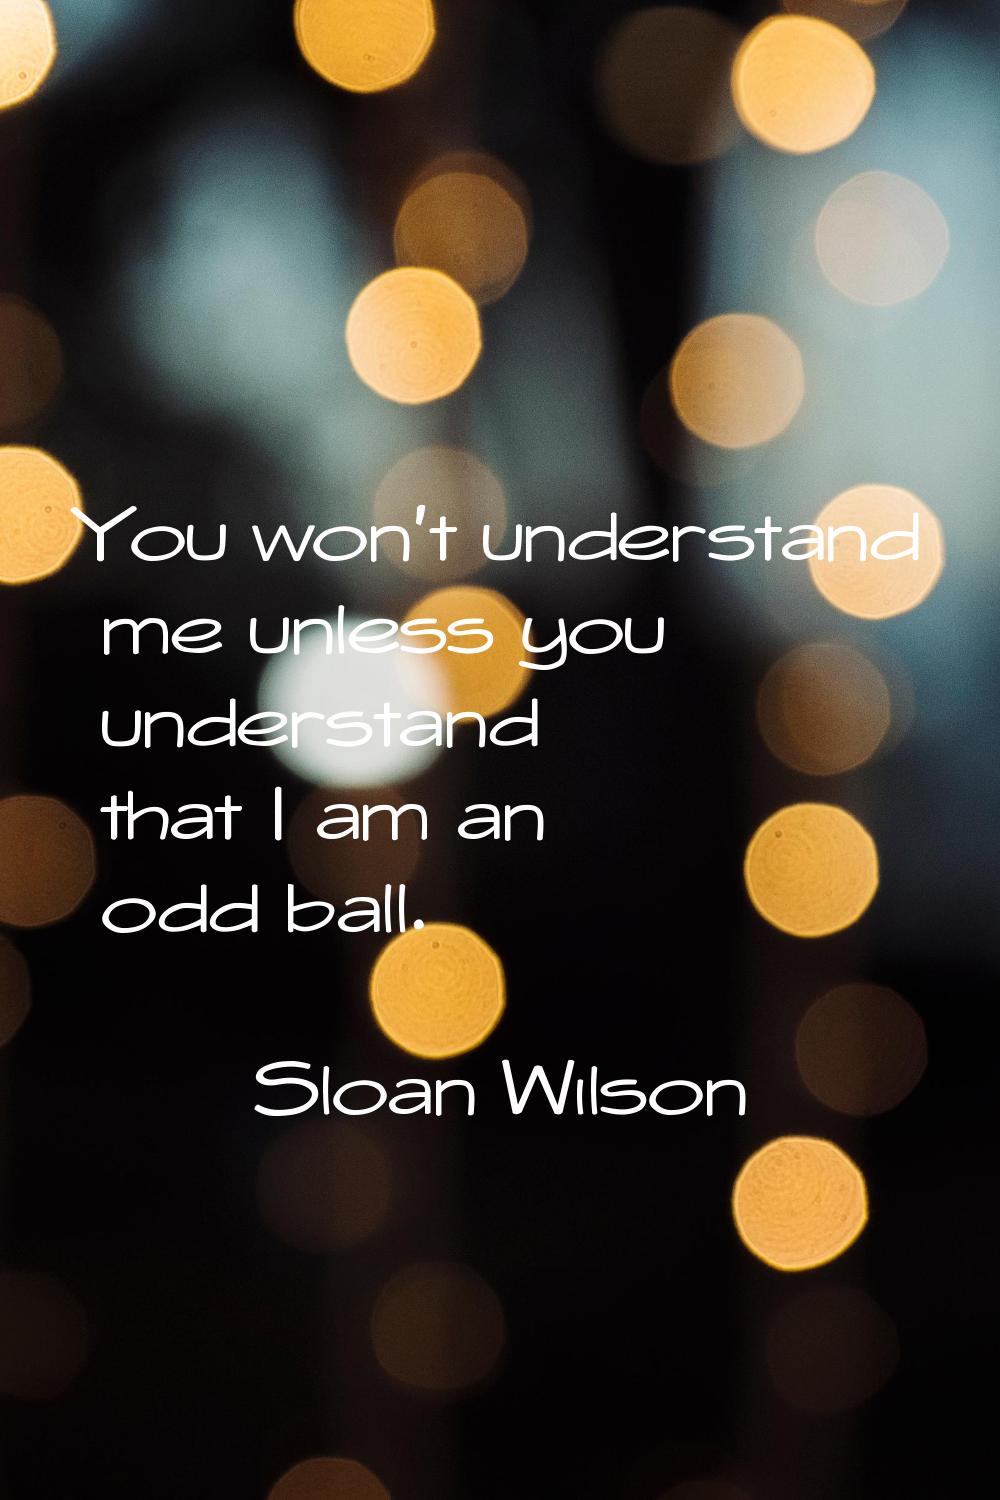 You won't understand me unless you understand that I am an odd ball.